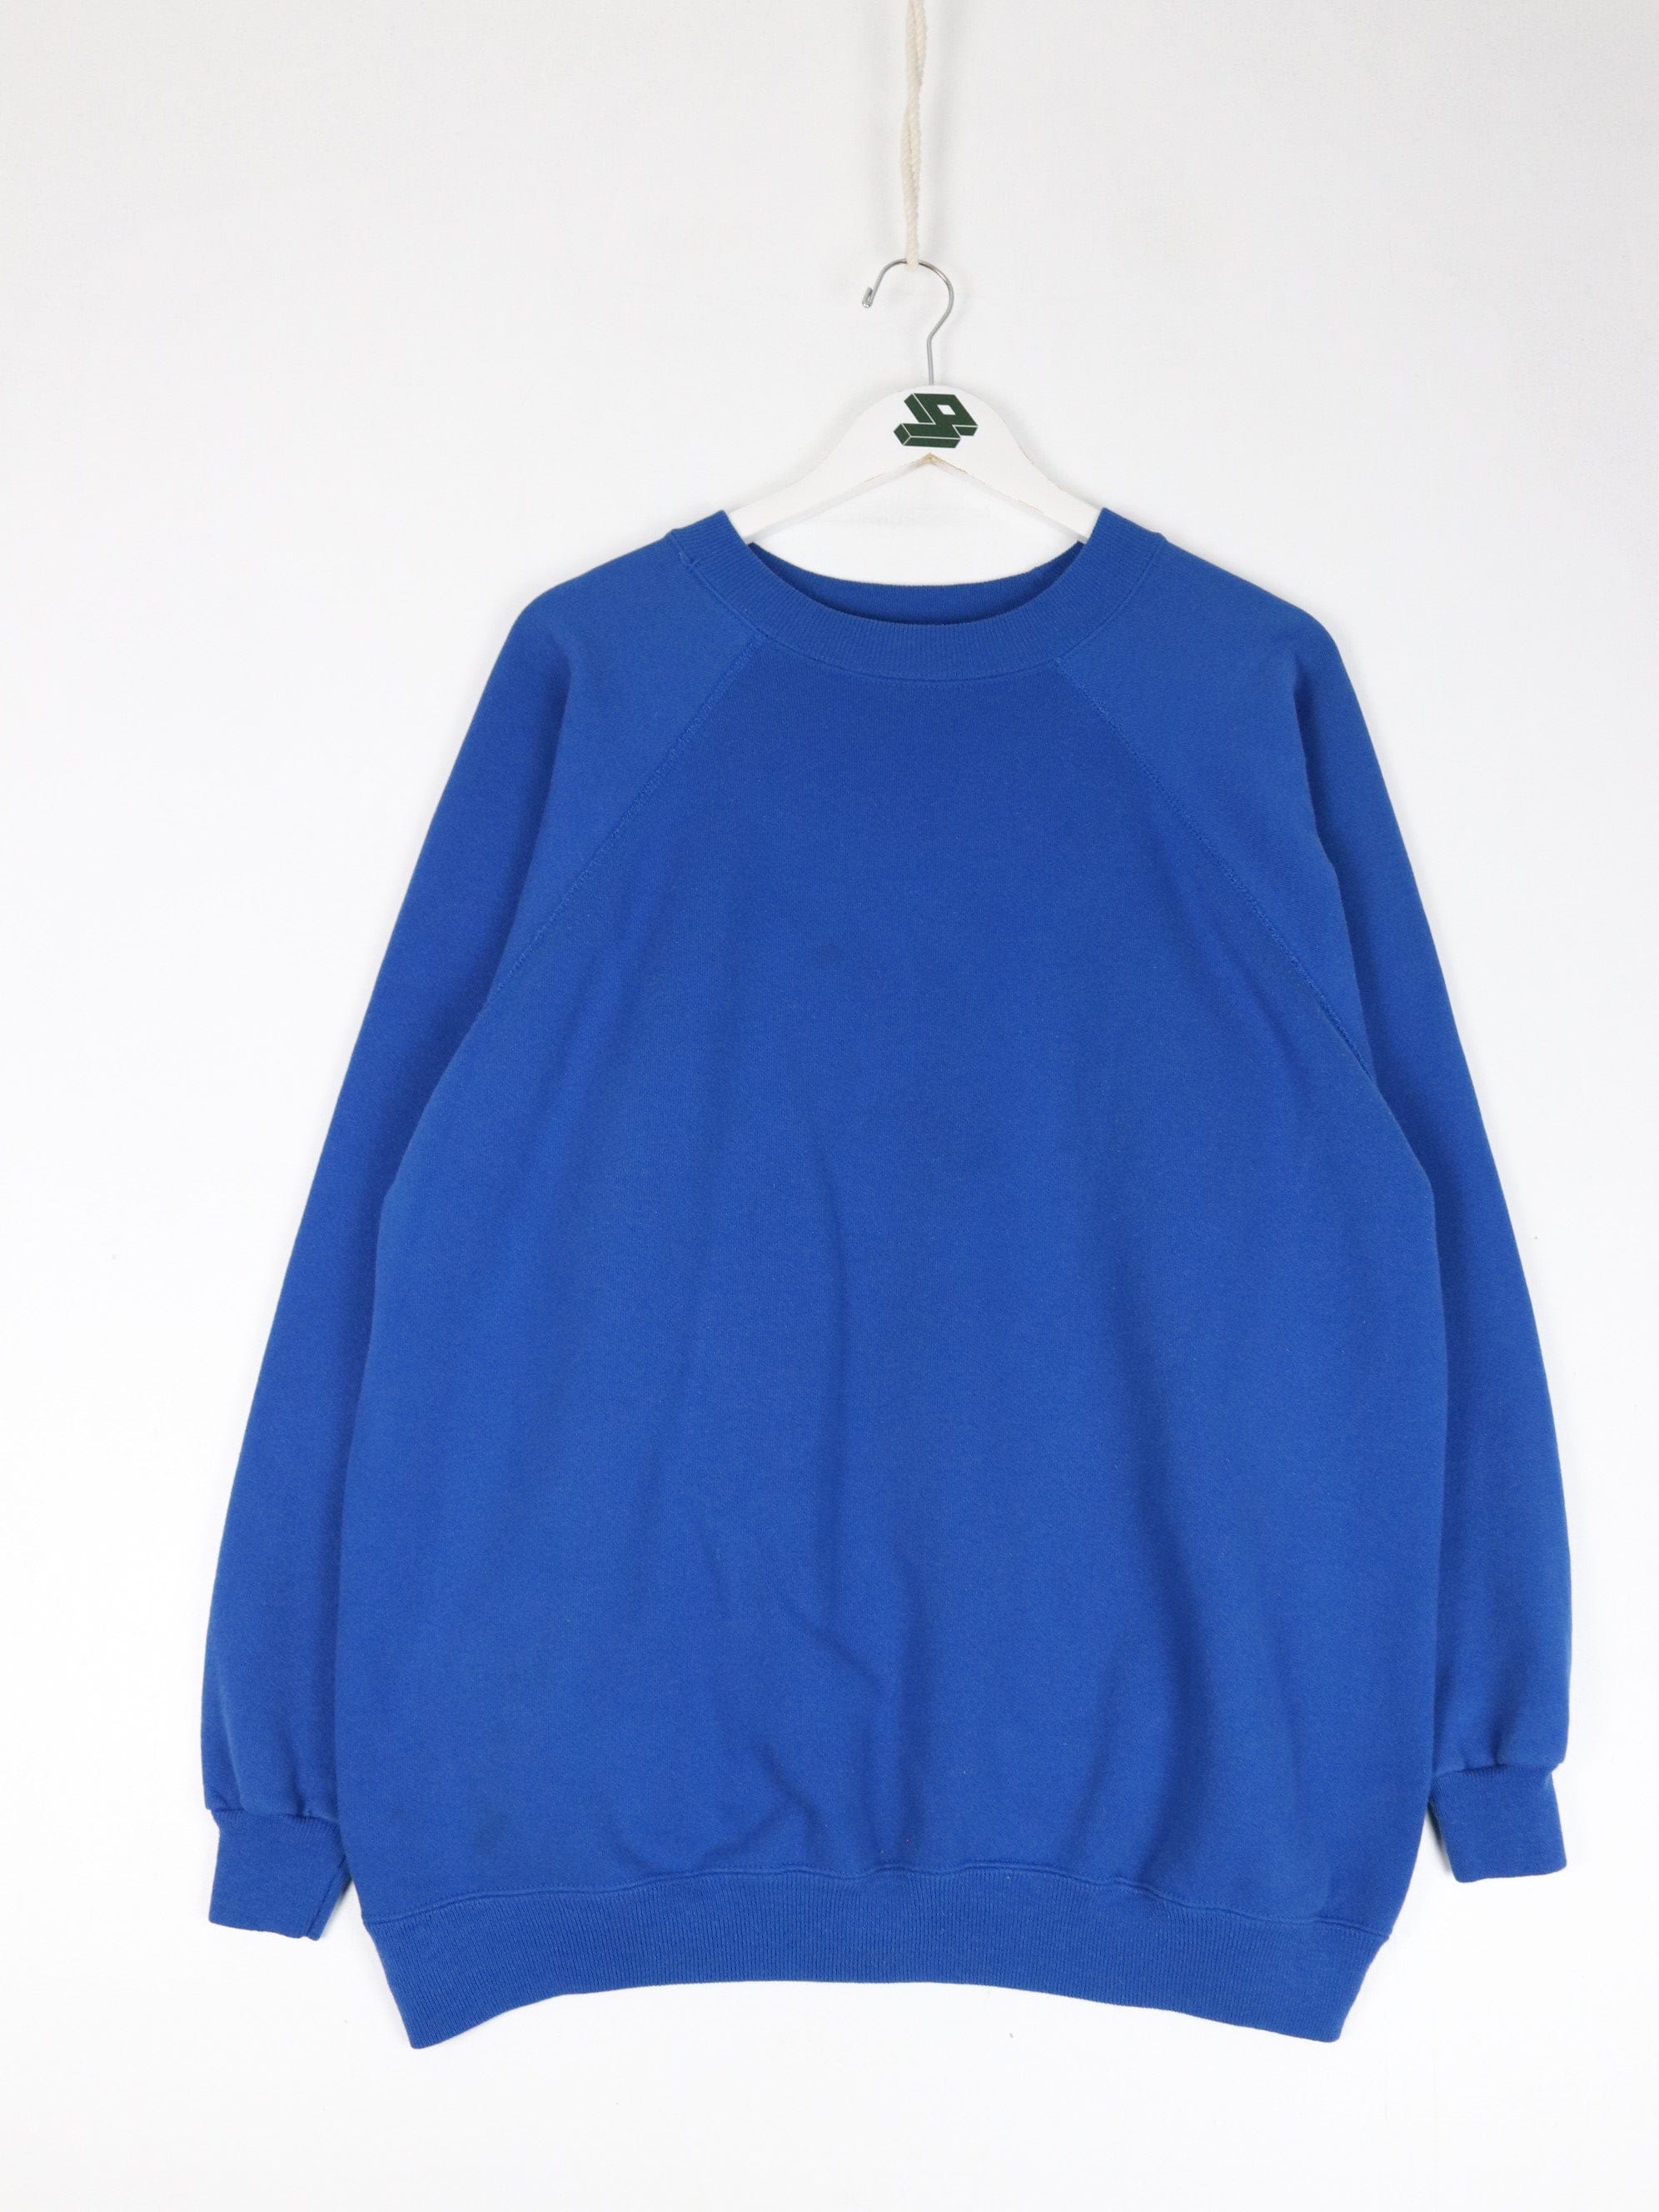 Vintage Hanes Her Ways Sweatshirt Mens 2XL Blue Blank Sweater